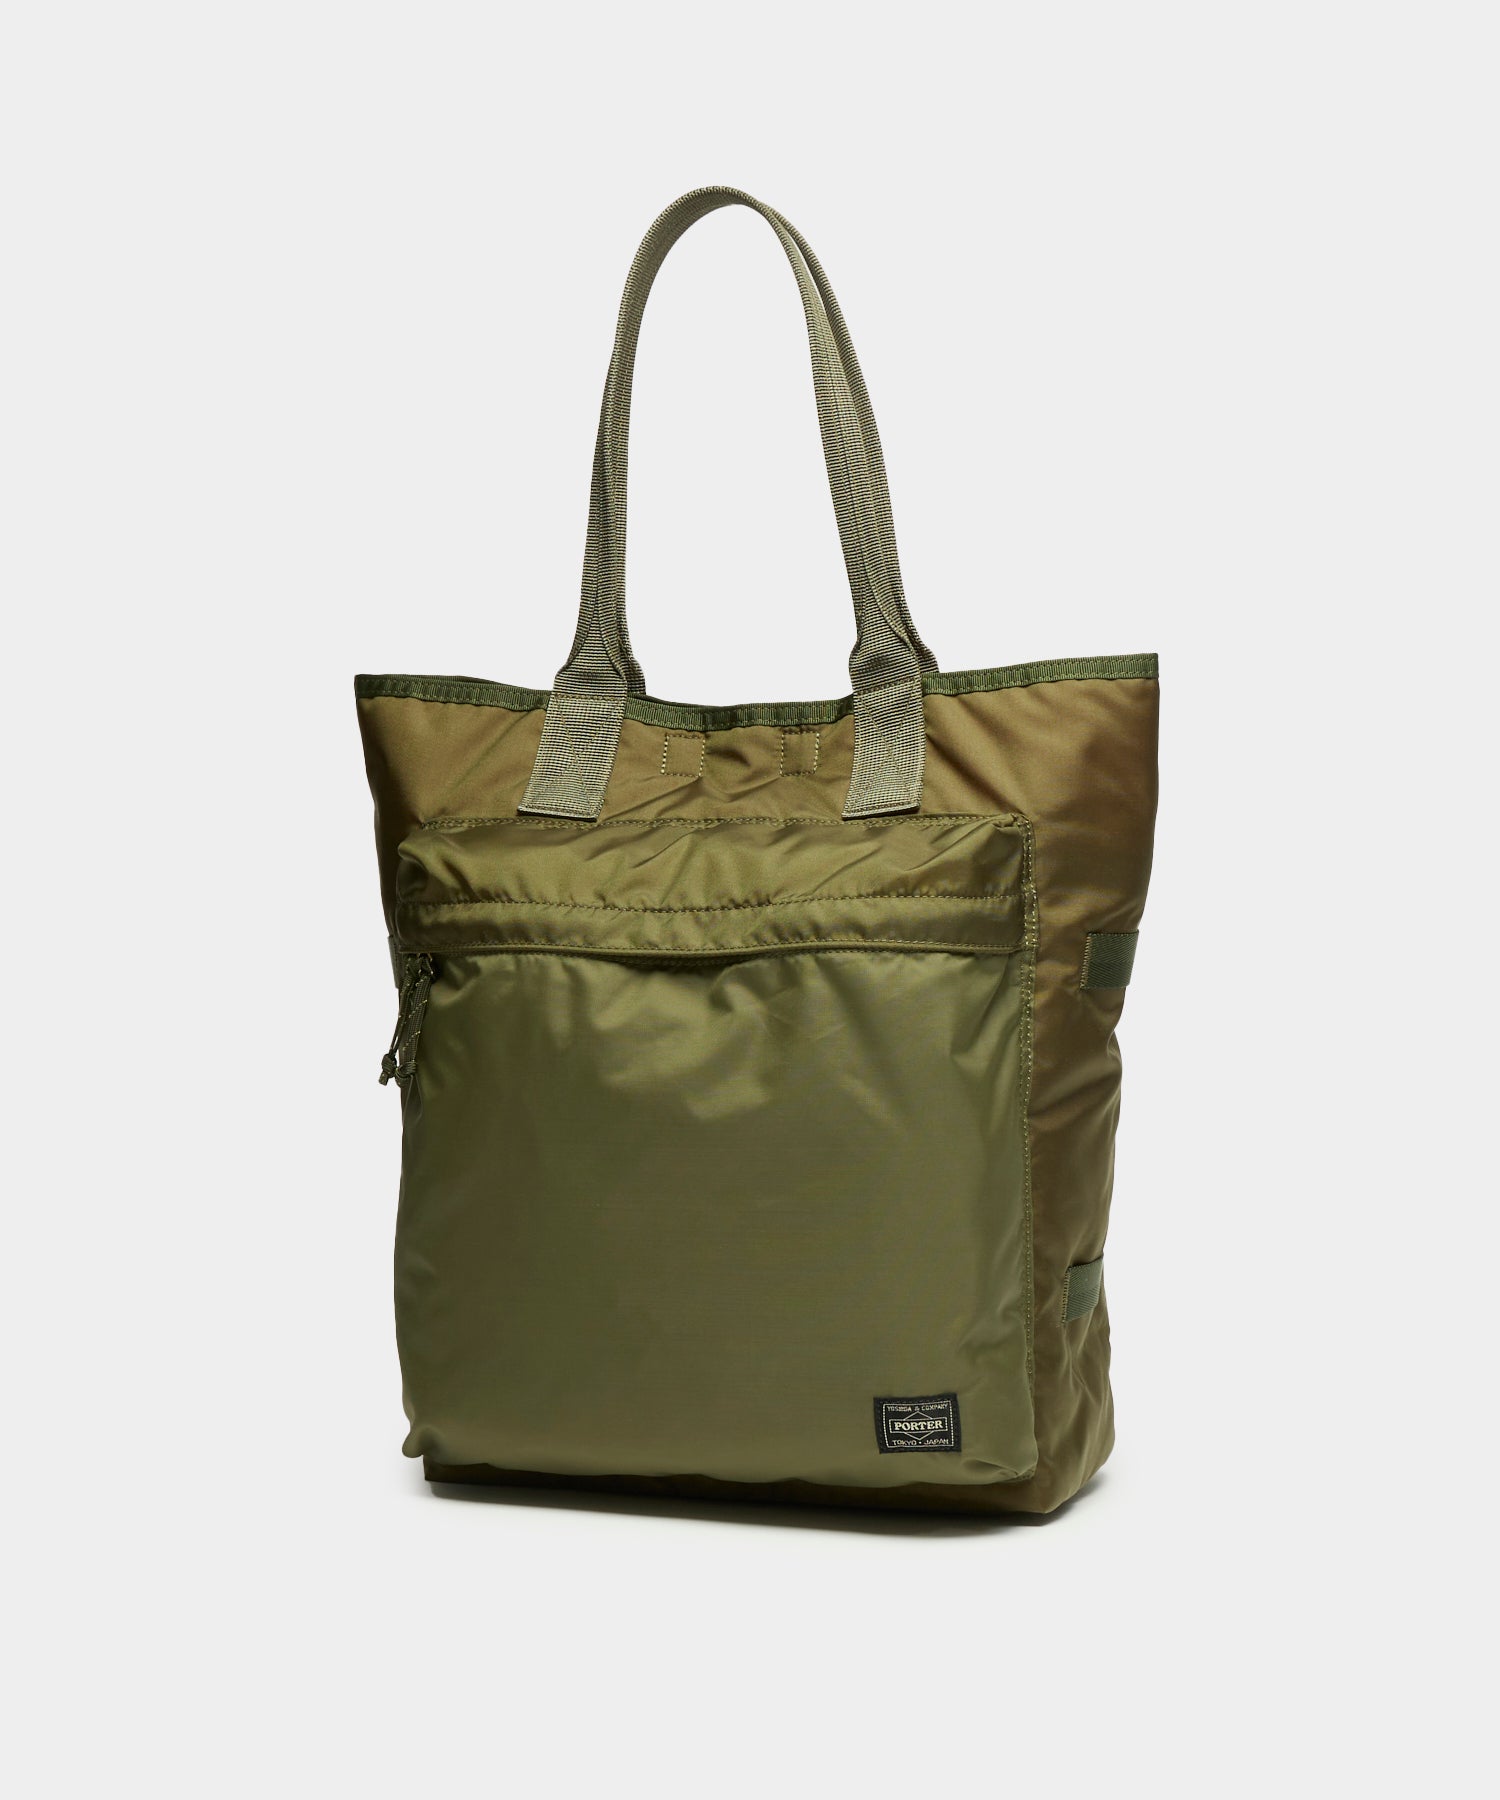 Porter Yoshida & Co. Force Tote Bag in Olive